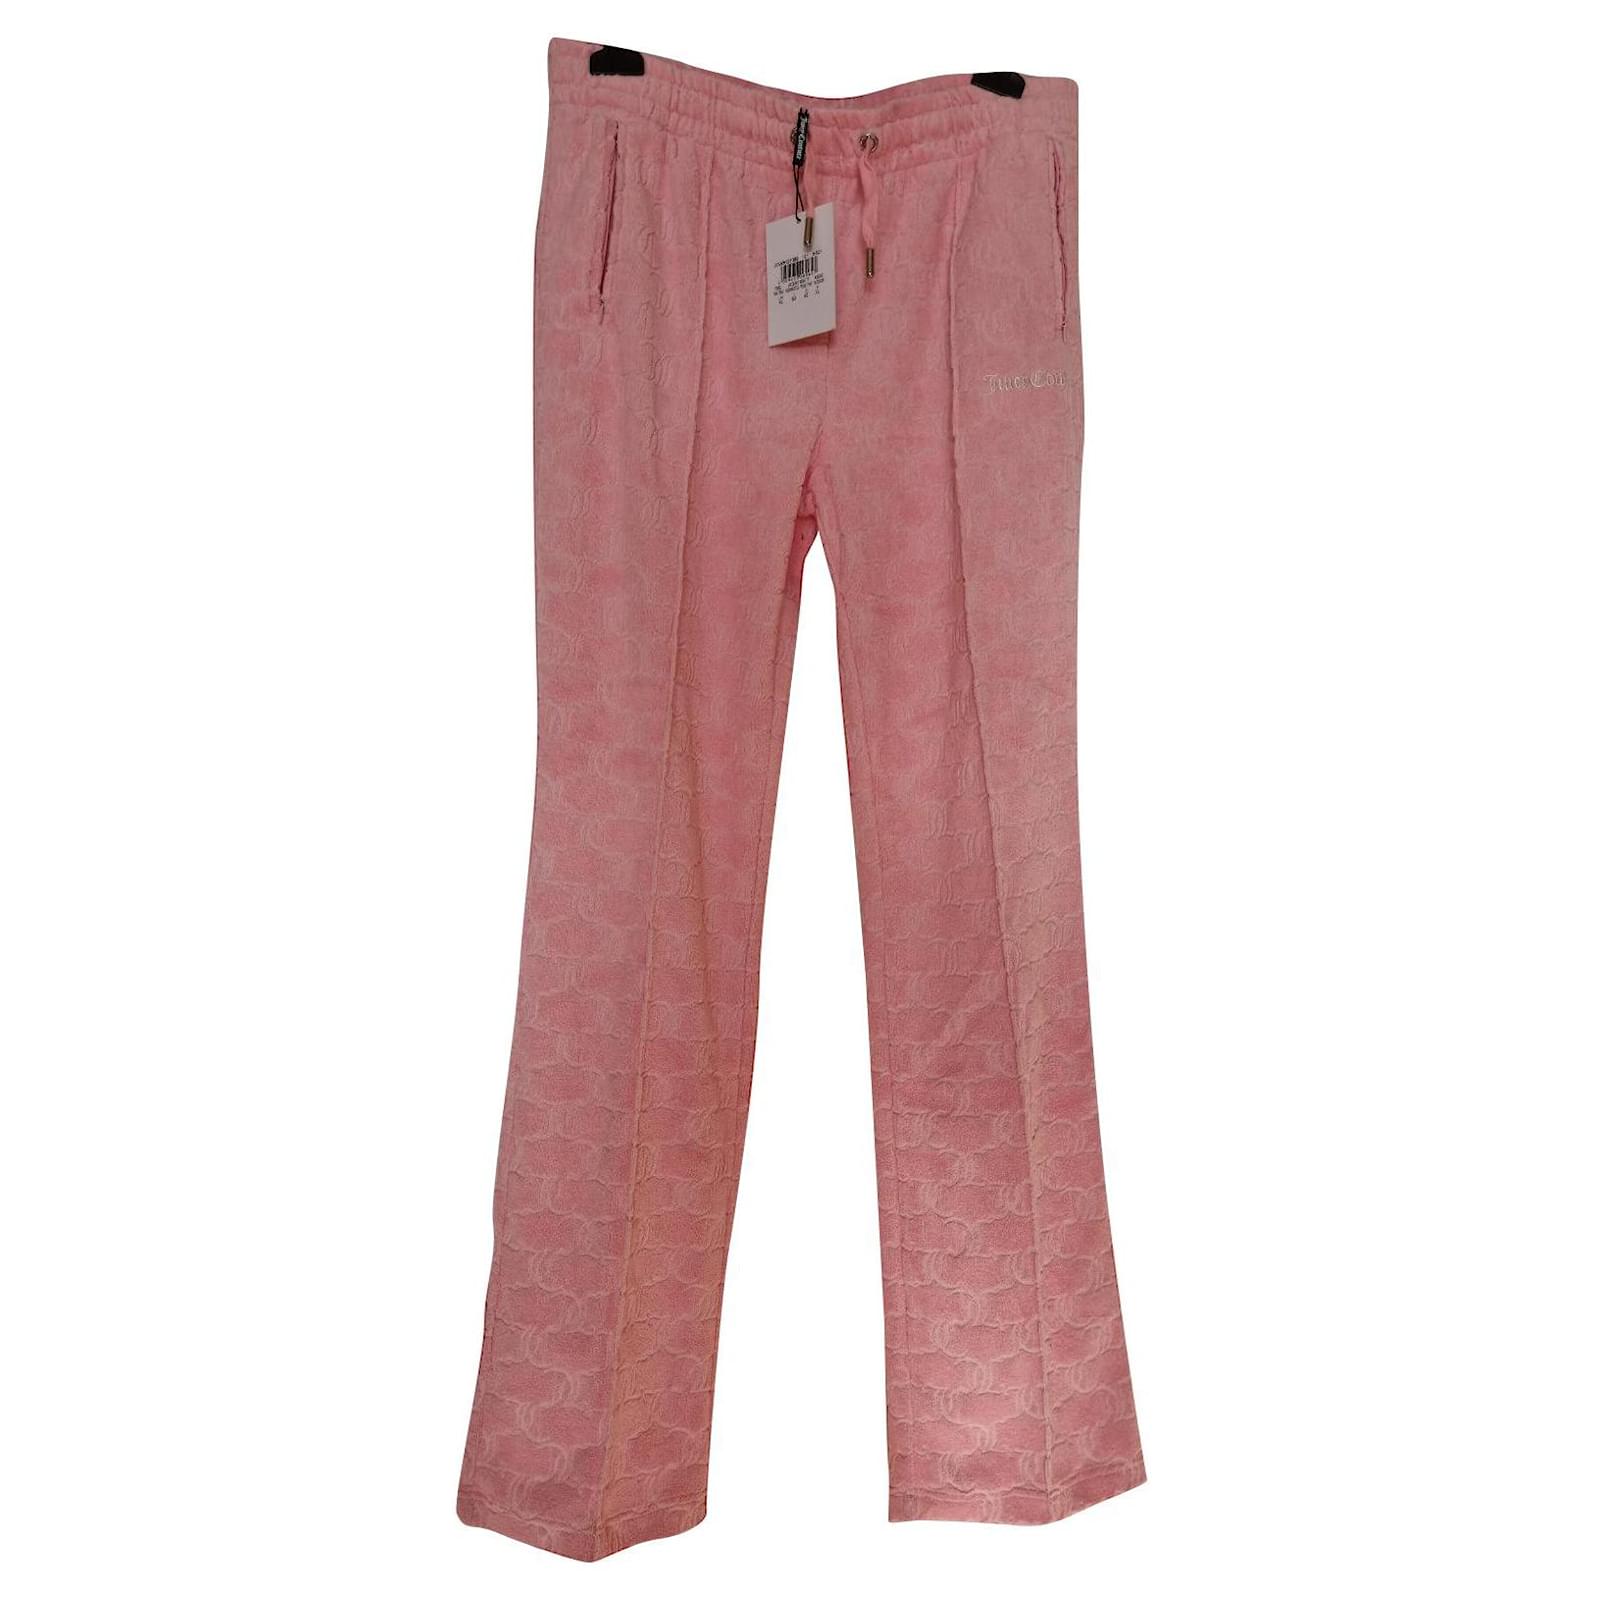 https://cdn1.jolicloset.com/imgr/full/2022/02/454895-1/juicy-couture-pink-velvet-sweatpants.jpg